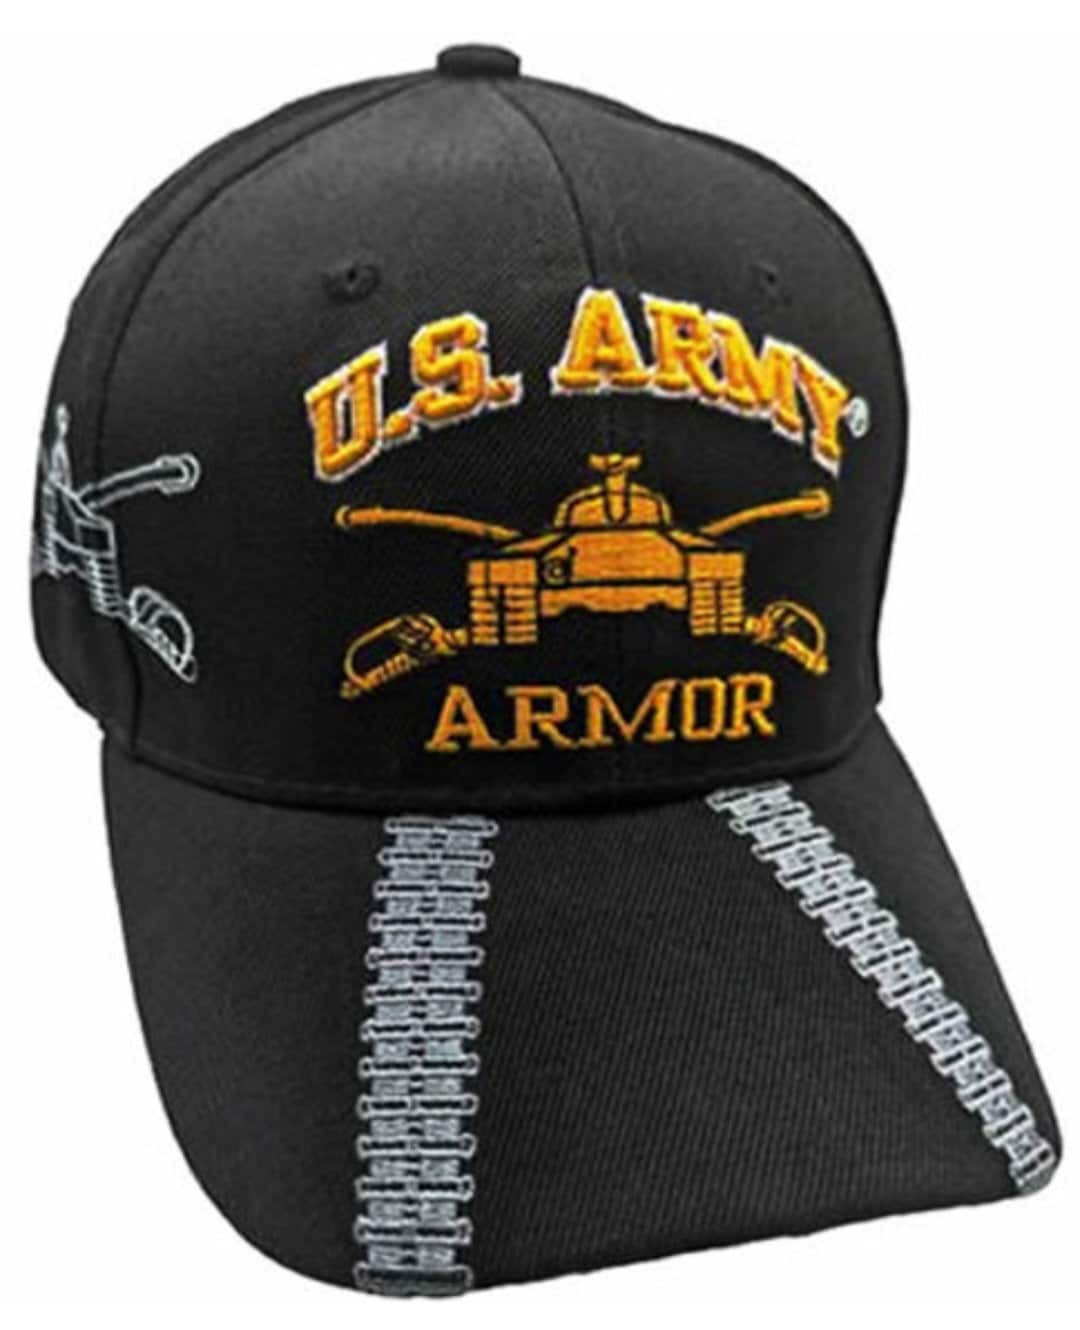 Us Army Armor Baseball Caps 